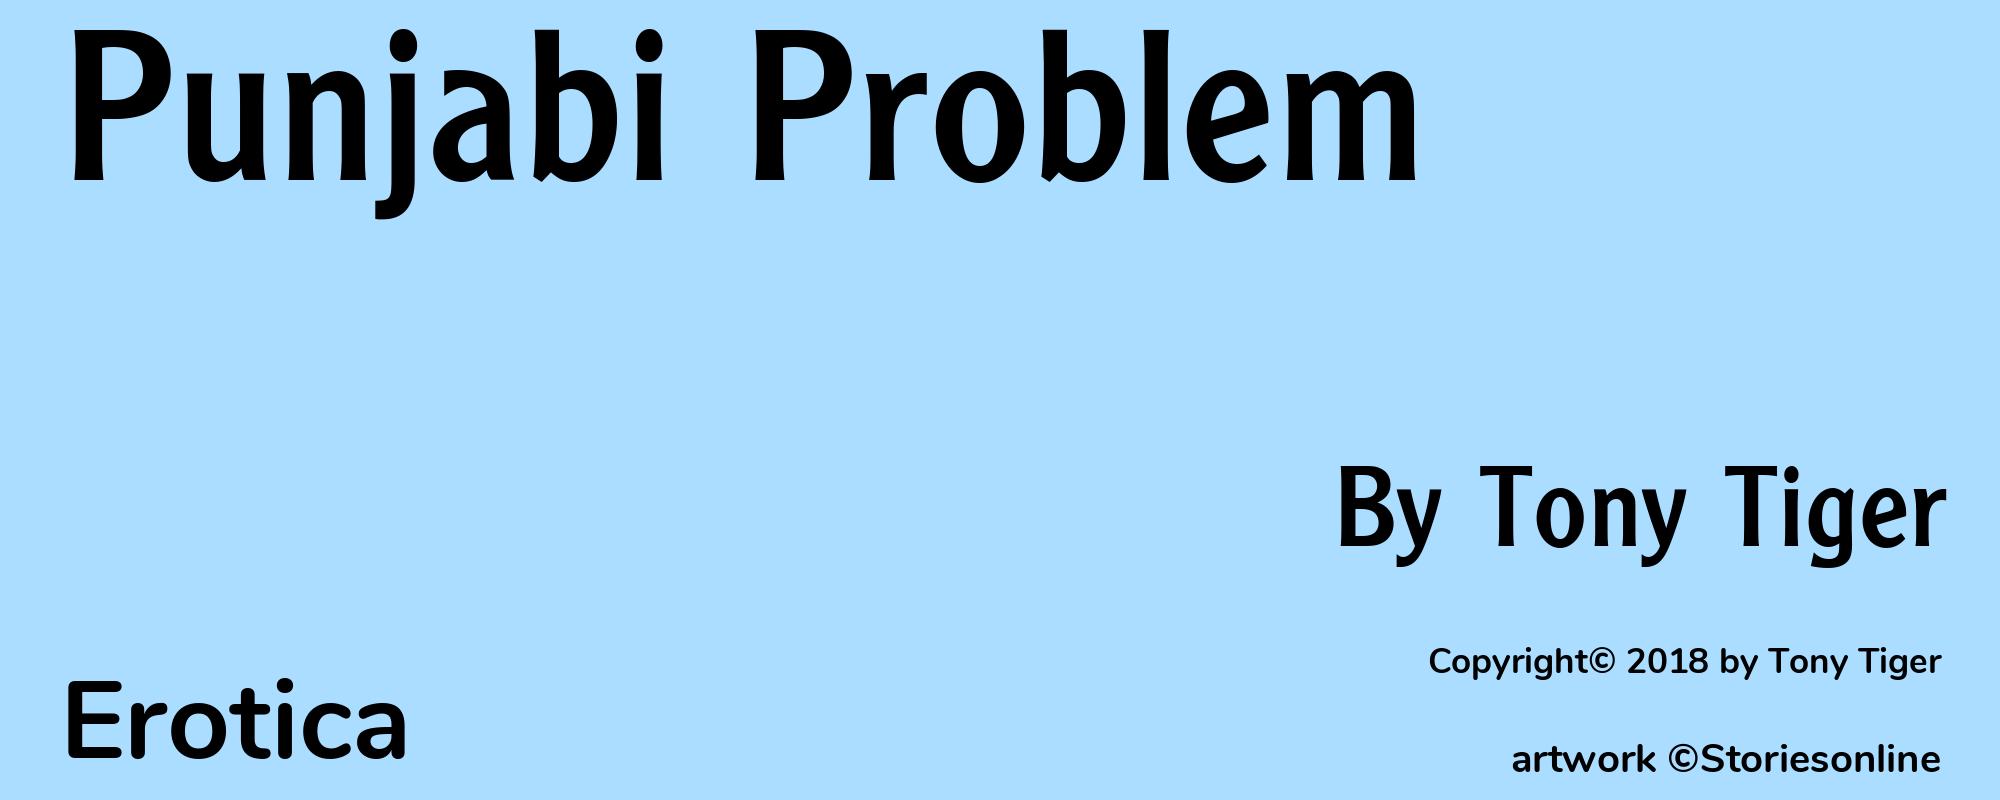 Punjabi Problem - Cover